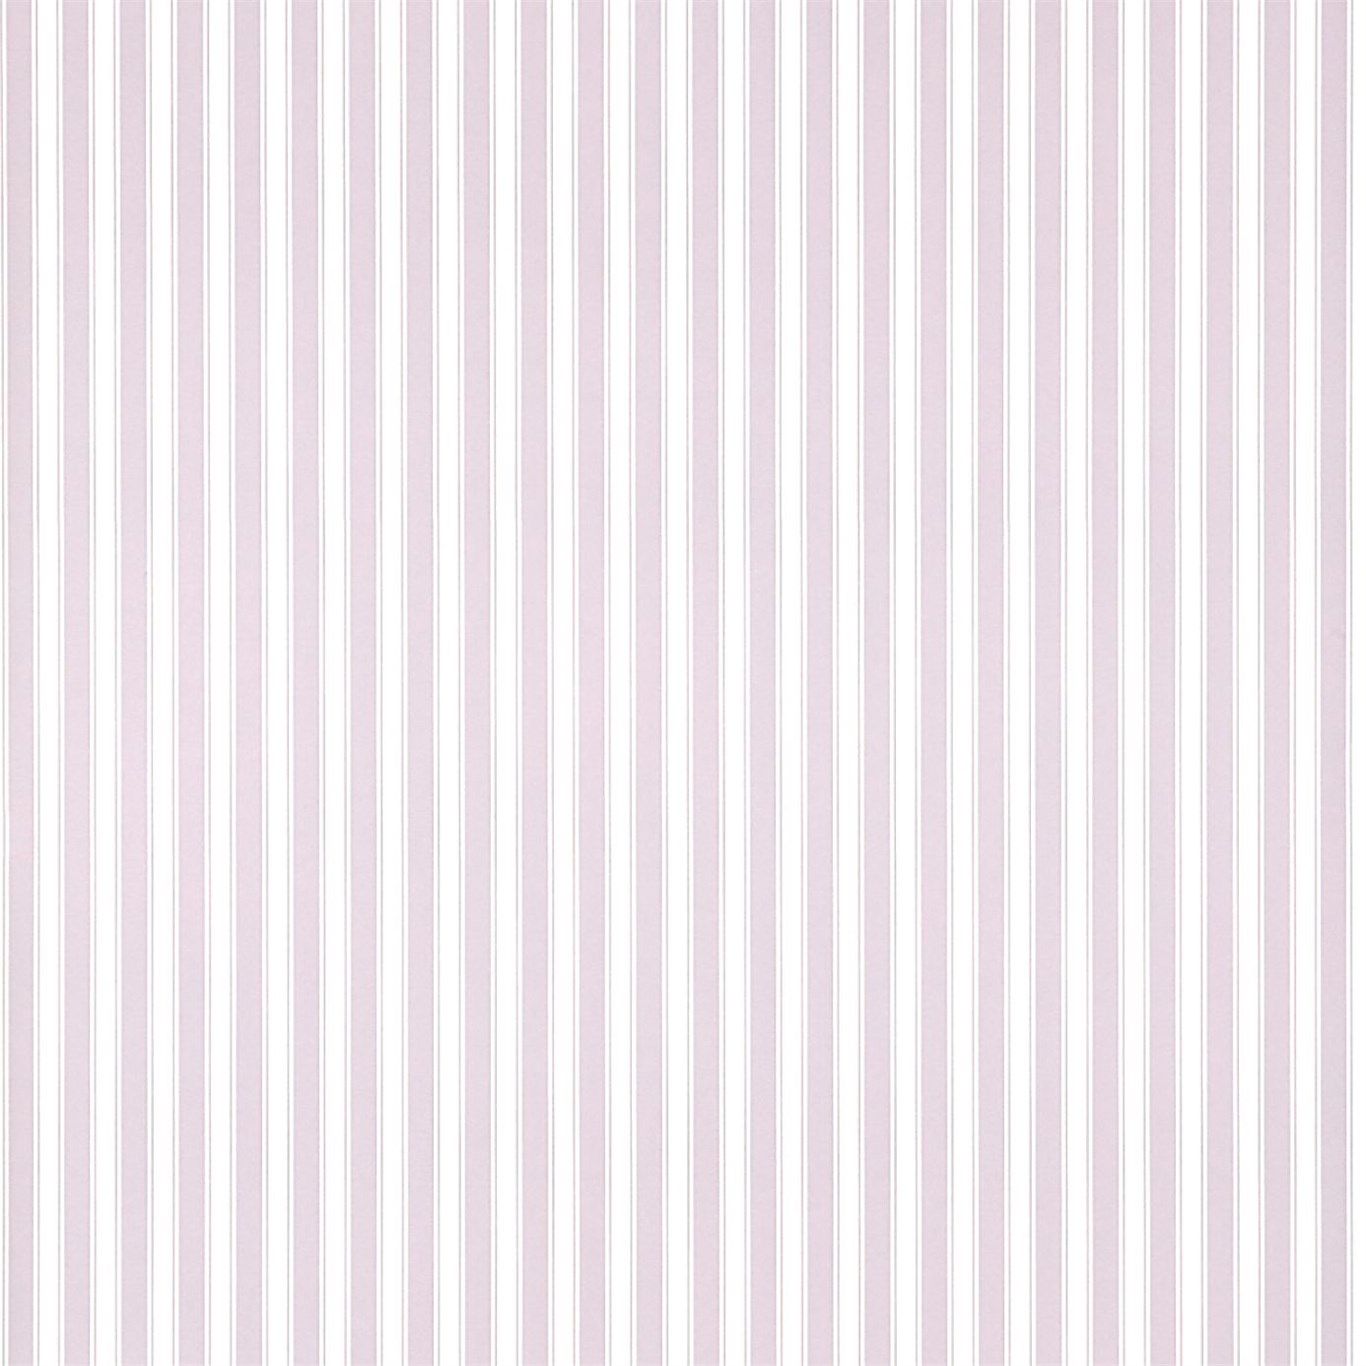 Wallpaper - Sanderson Caverley Wallpapers New Tiger Stripe Lavender/Ivory